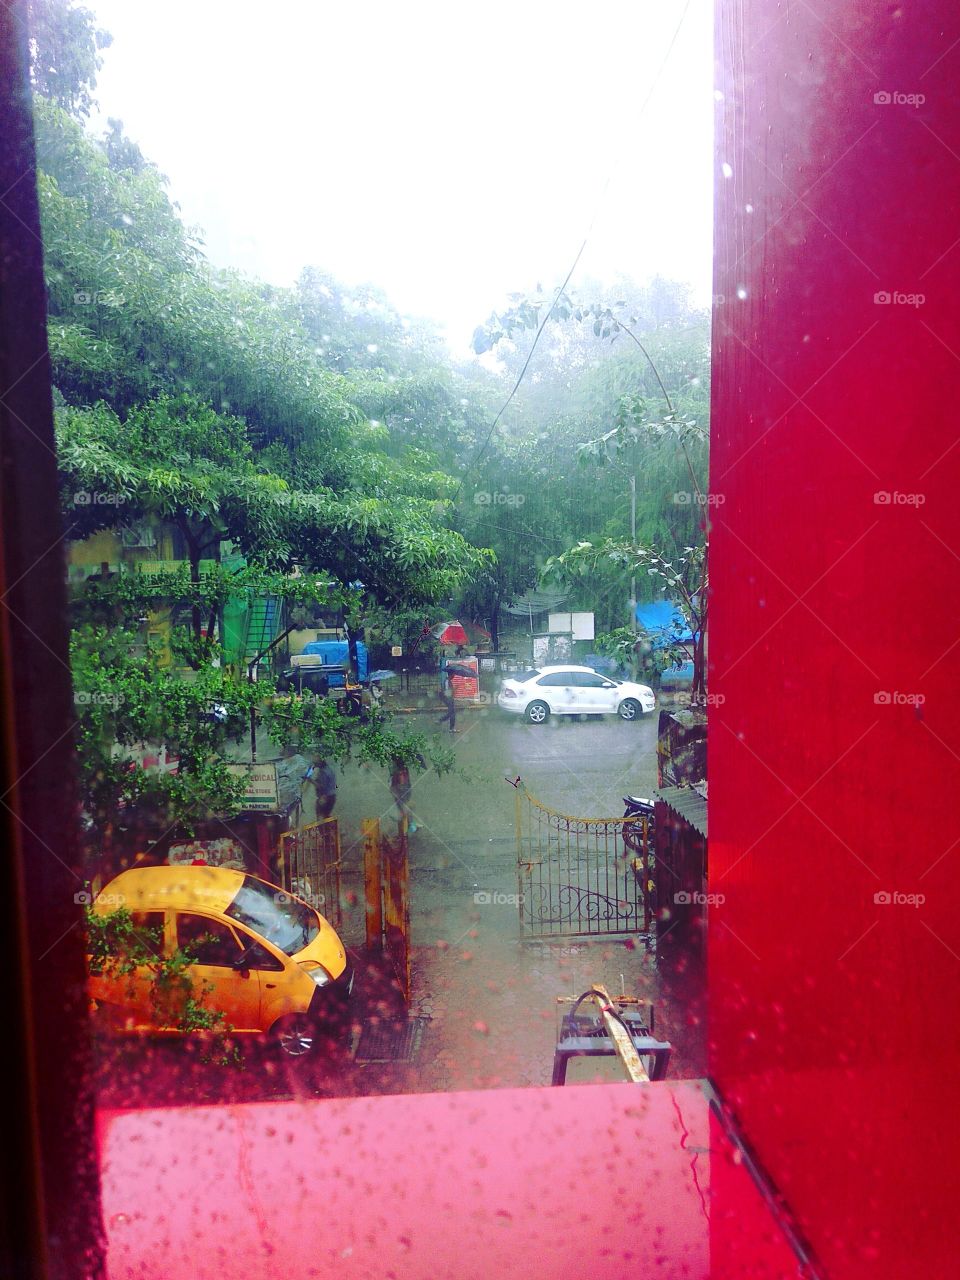 Window
rain 
car 
city
road